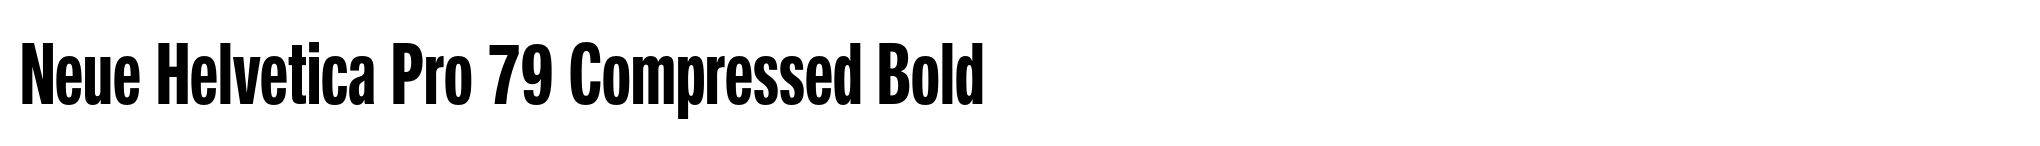 Neue Helvetica Pro 79 Compressed Bold image